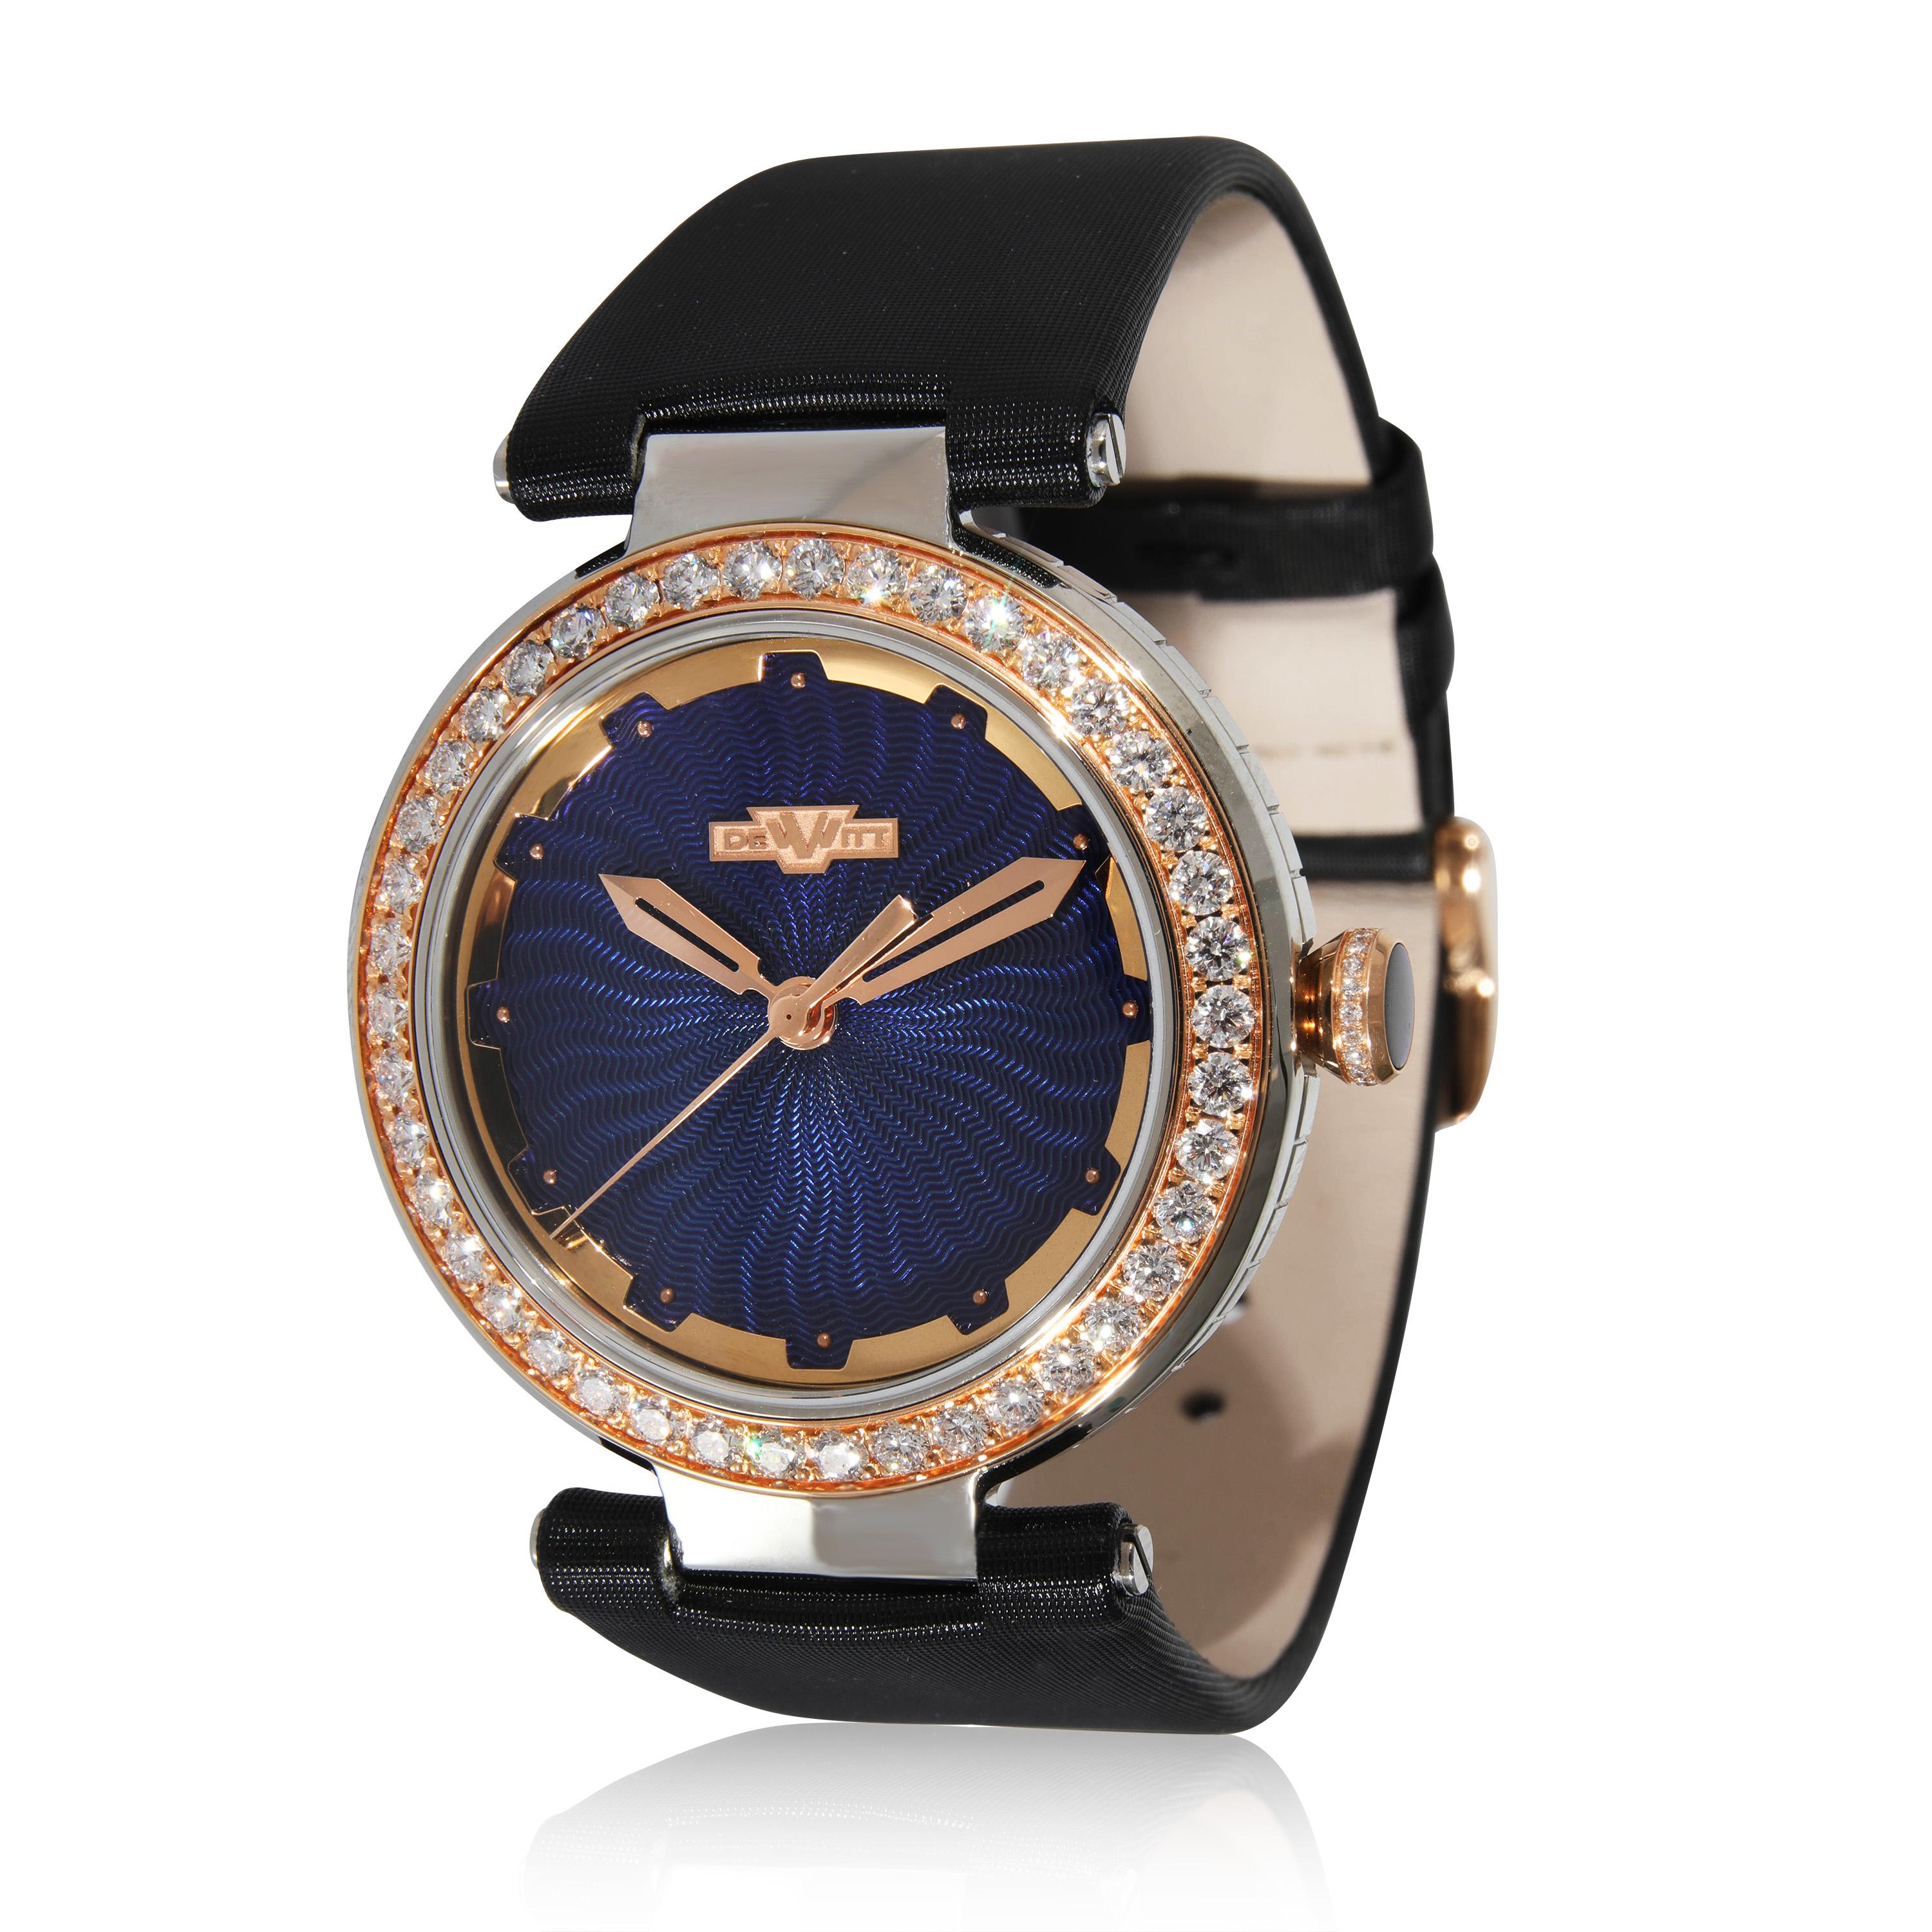 Dewitt Blue Empire BEM.Qz.001-BLK Unisex Watch in 18kt Stainless Steel/Rose Gold For Sale 1